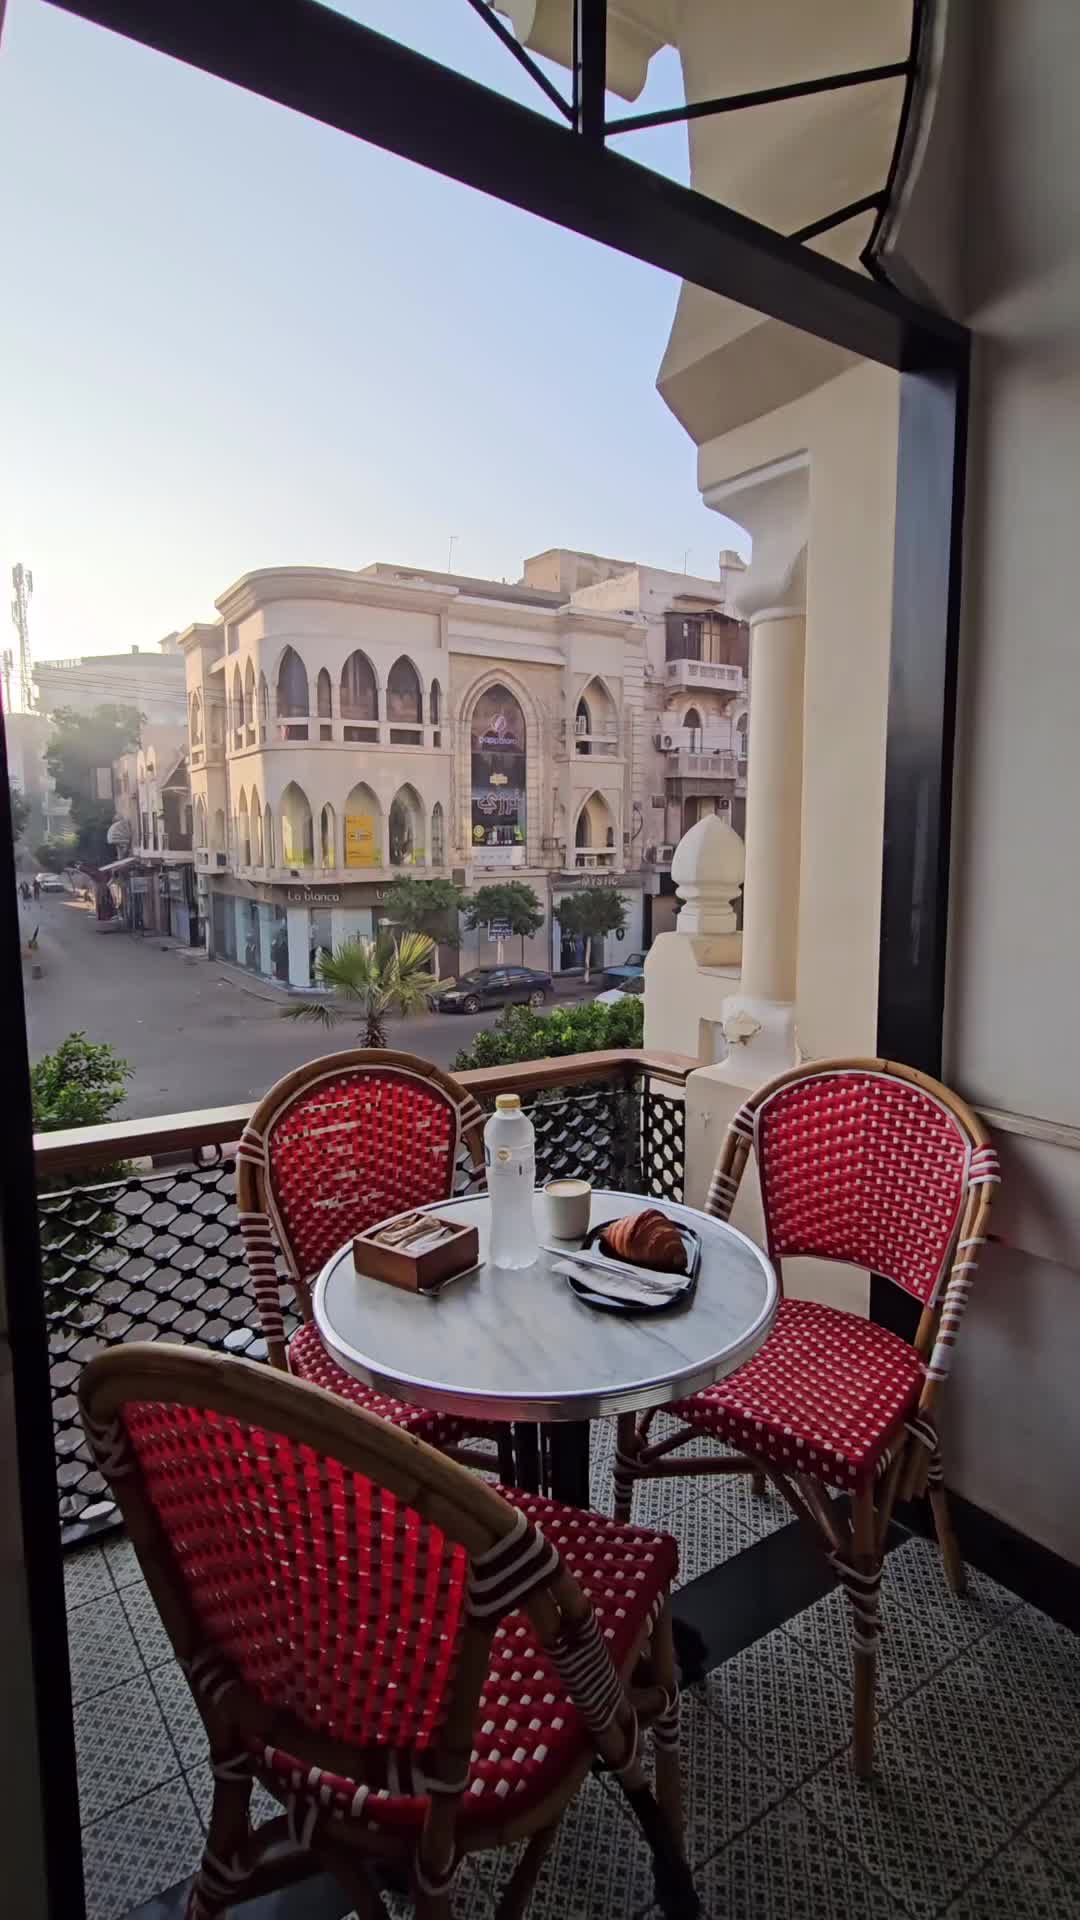 Serene Morning Coffee in El Korba, Cairo